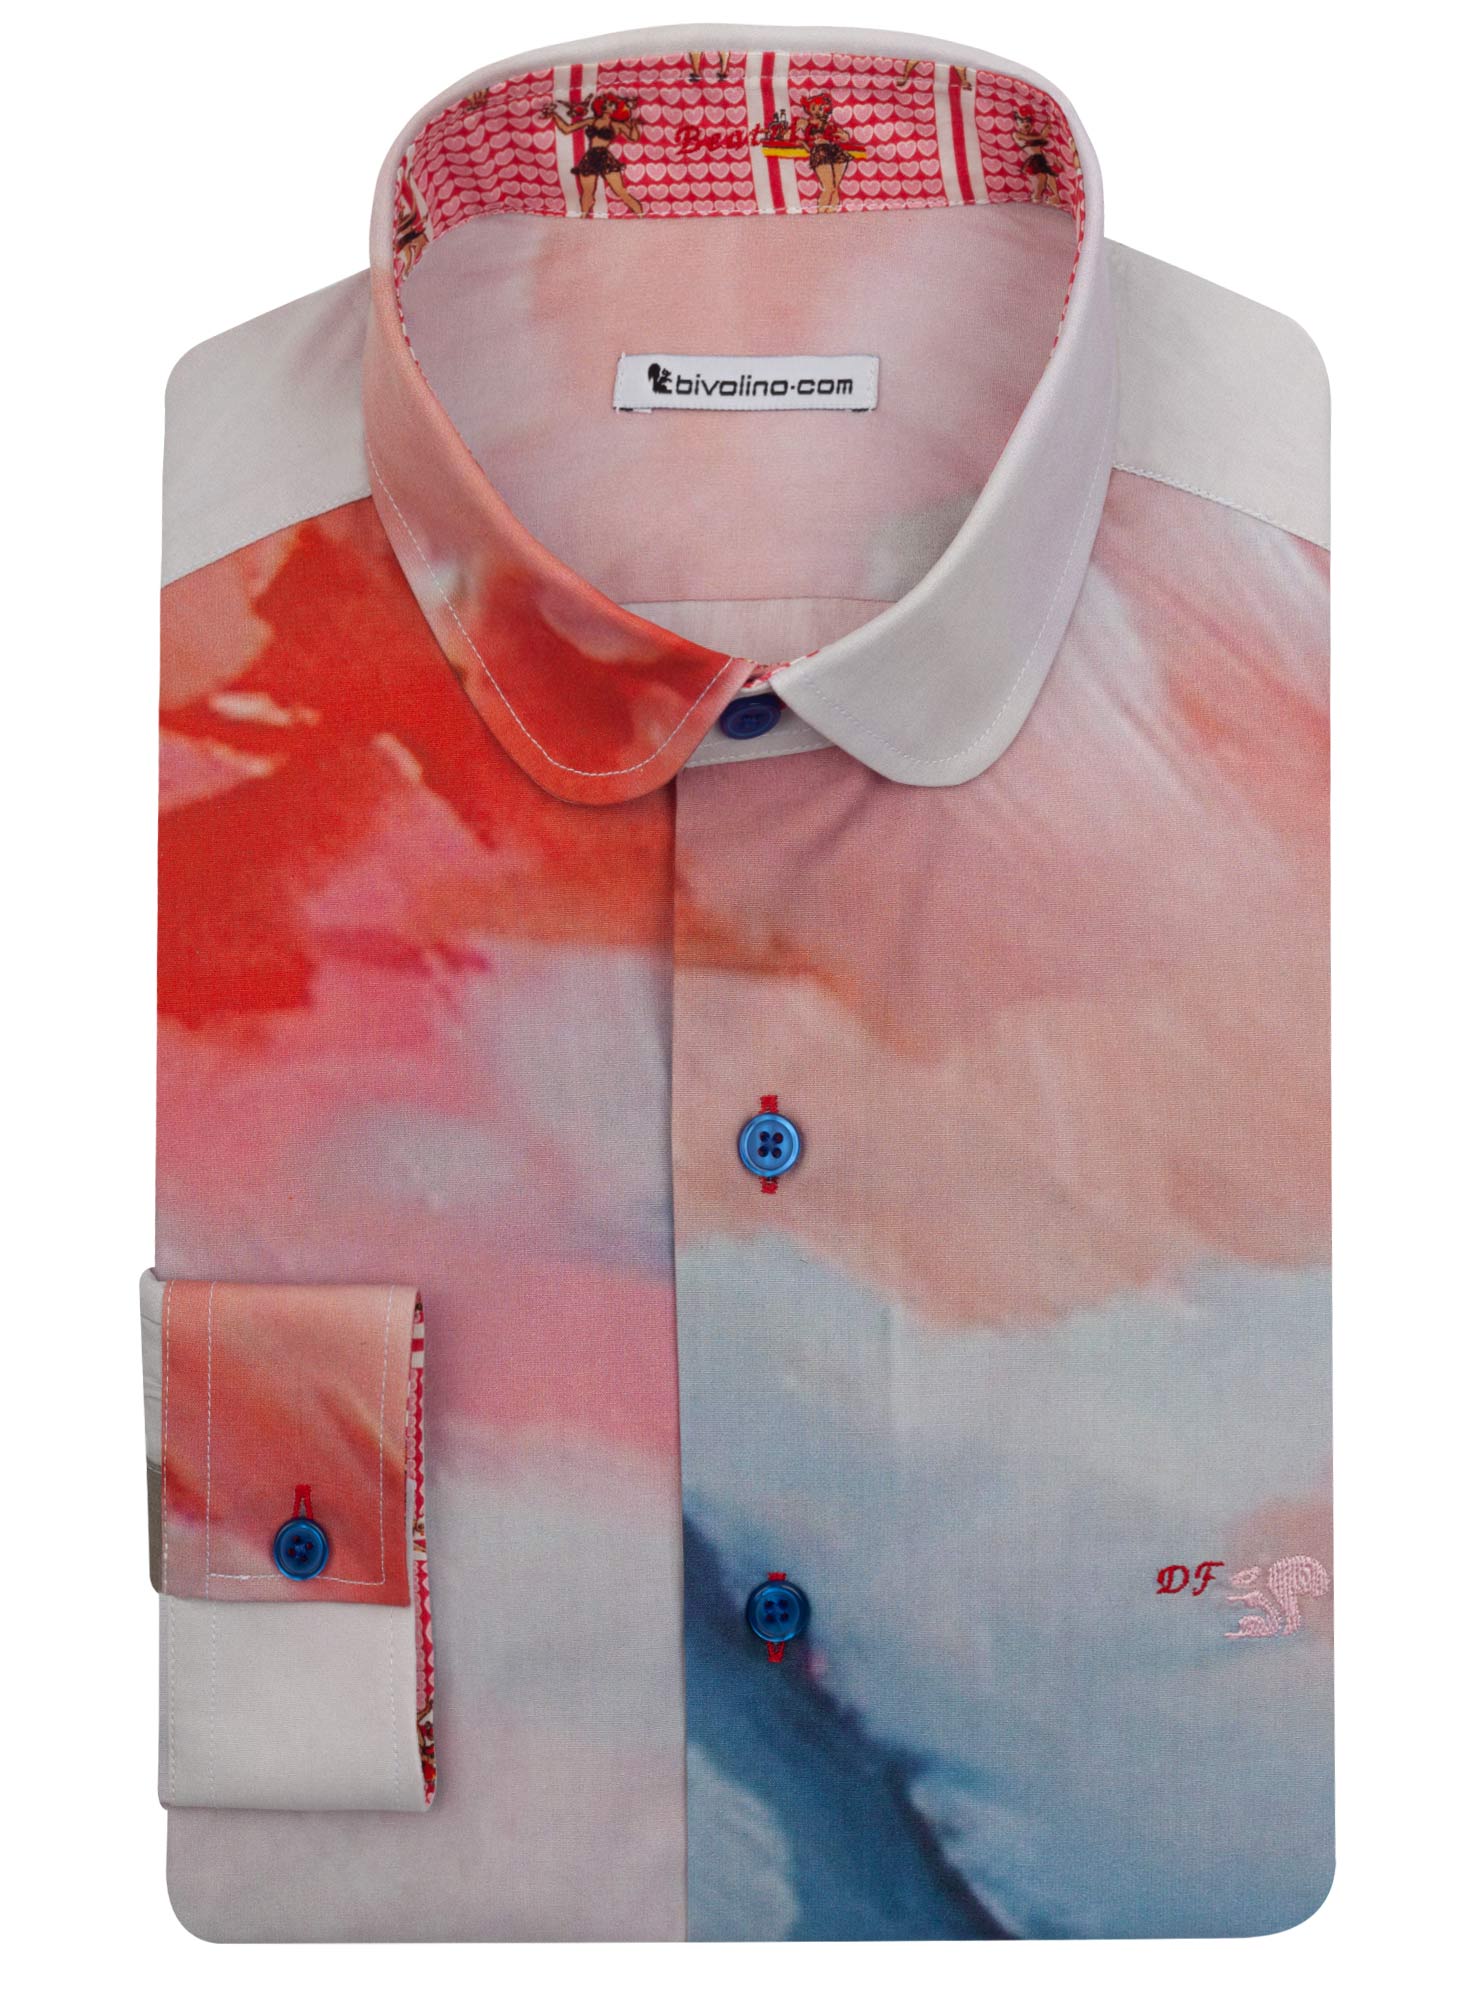 TEMPIO PAUSANIA - artist-print men shirt contrast BARBIE - MIEKE VANMECHELEN 3